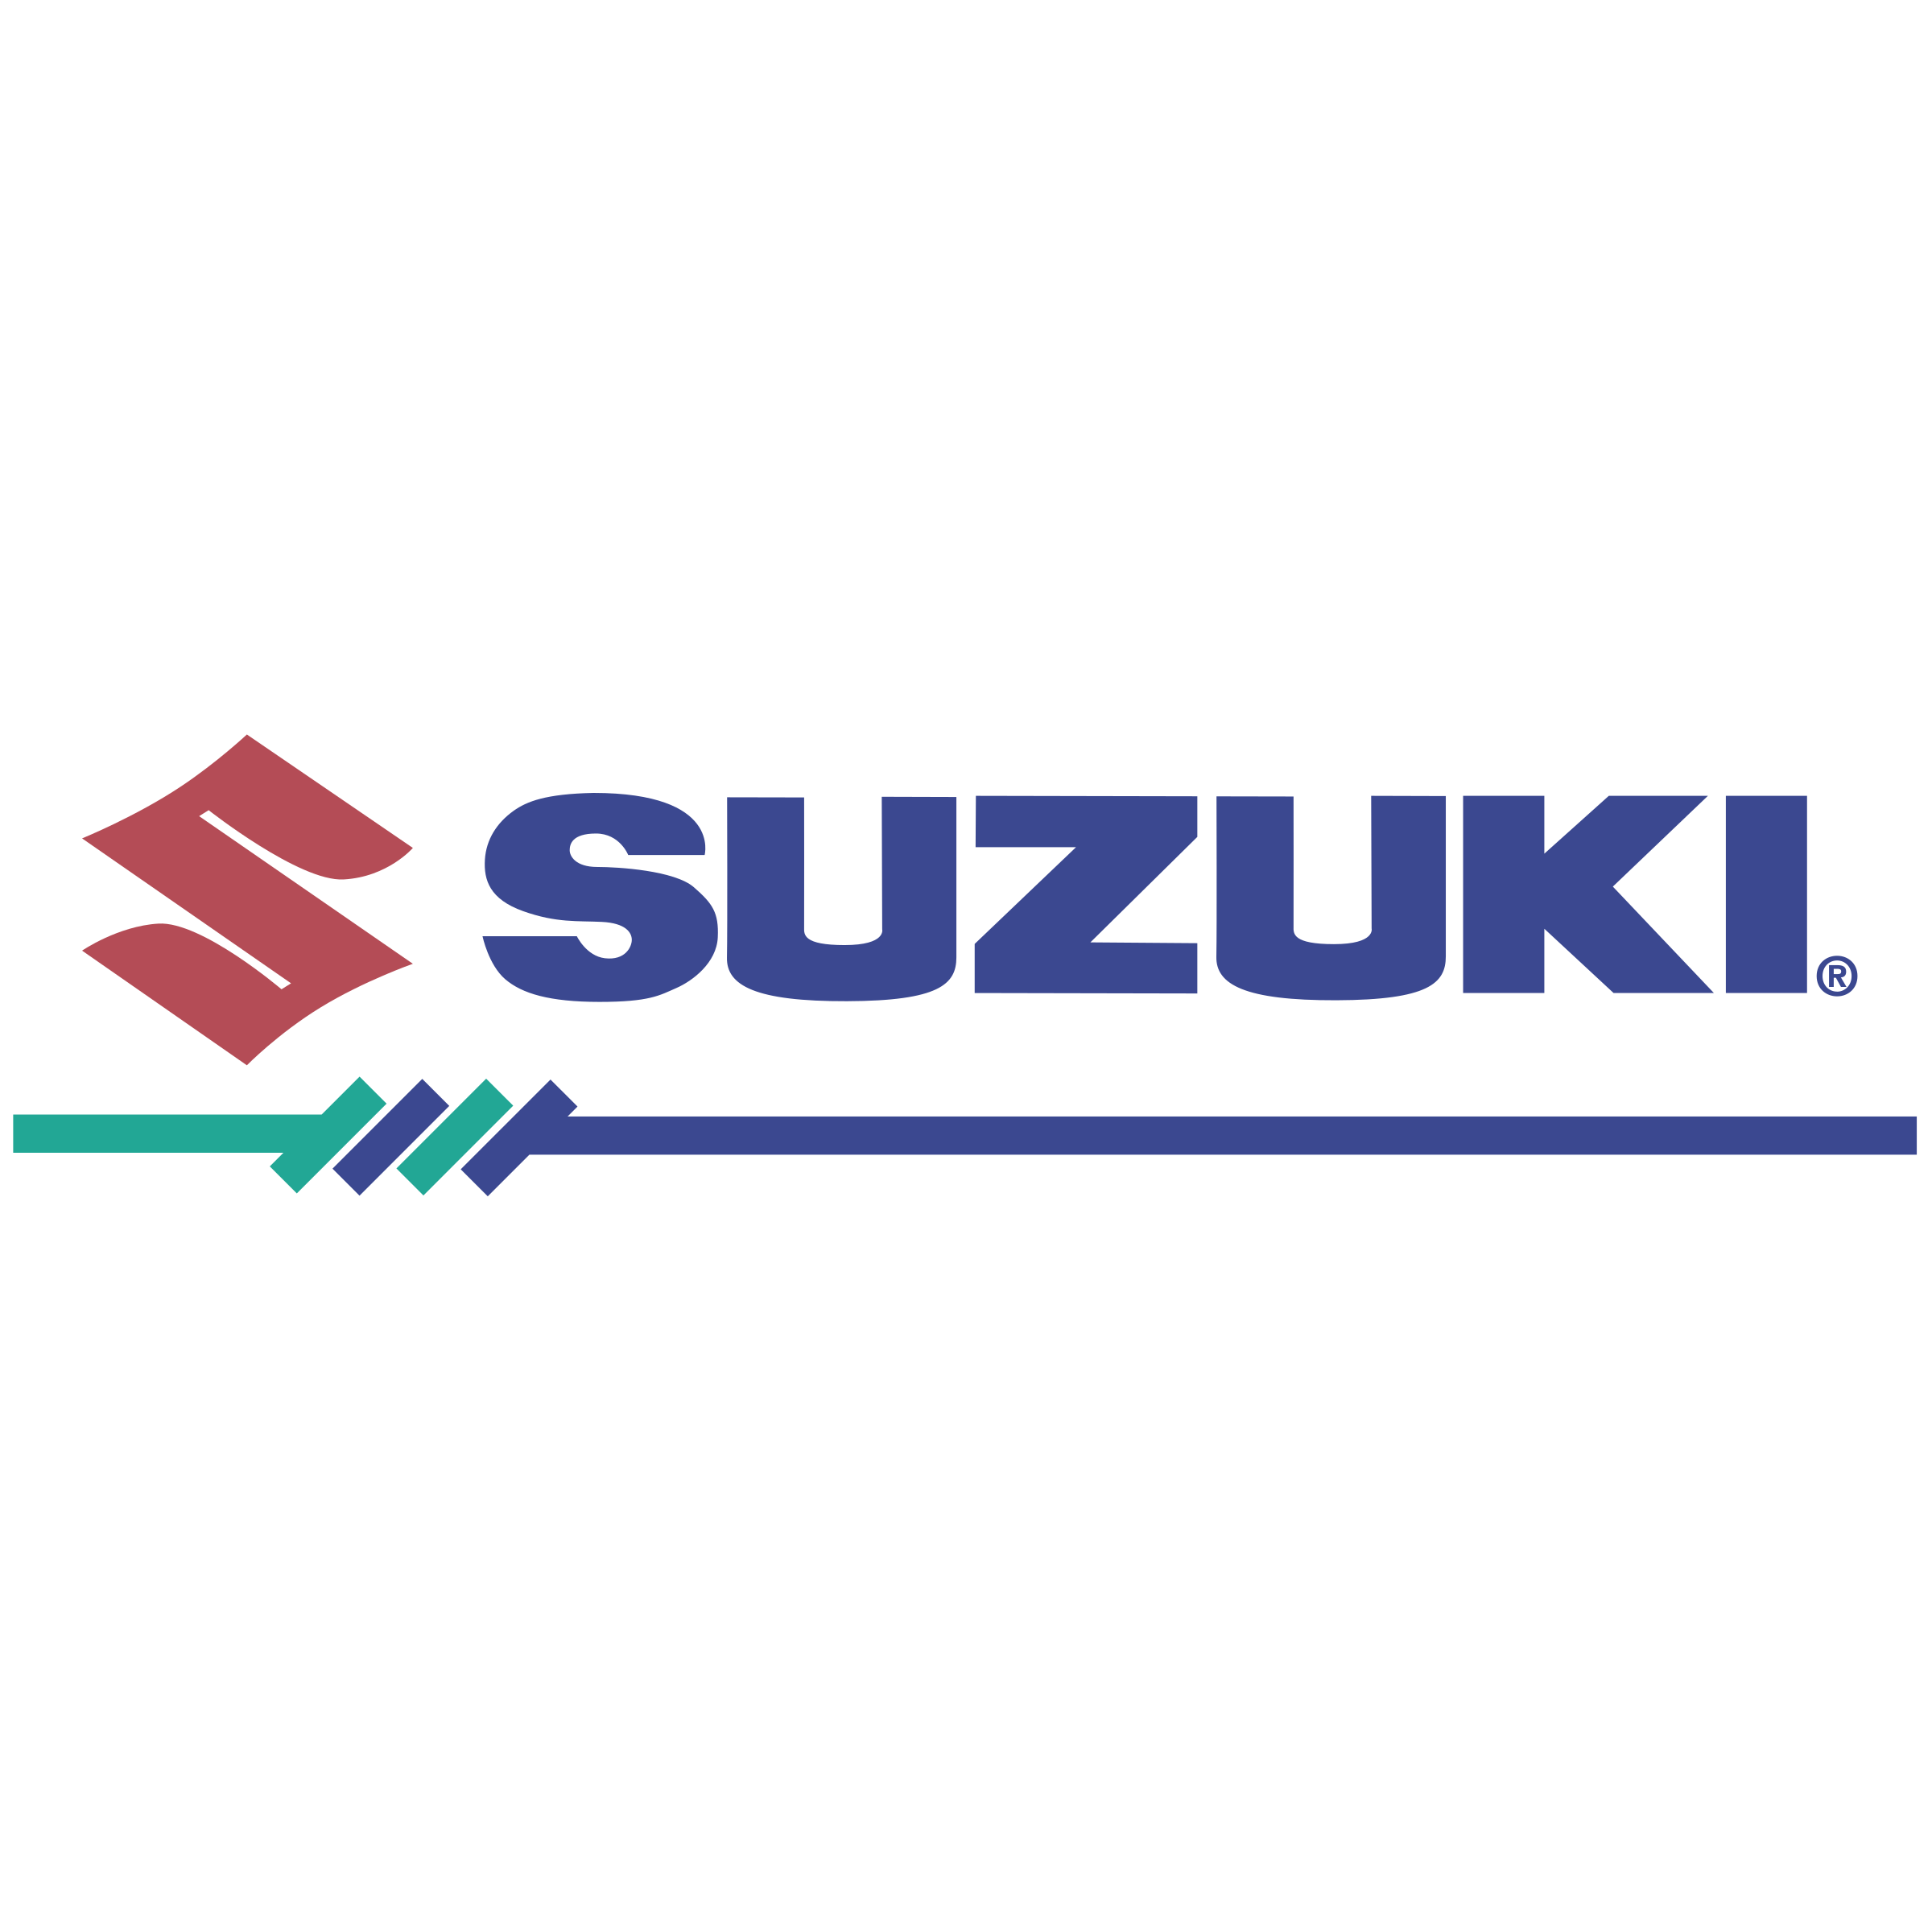 Logo Suzuki Maruti PNG Image High Quality PNG Image